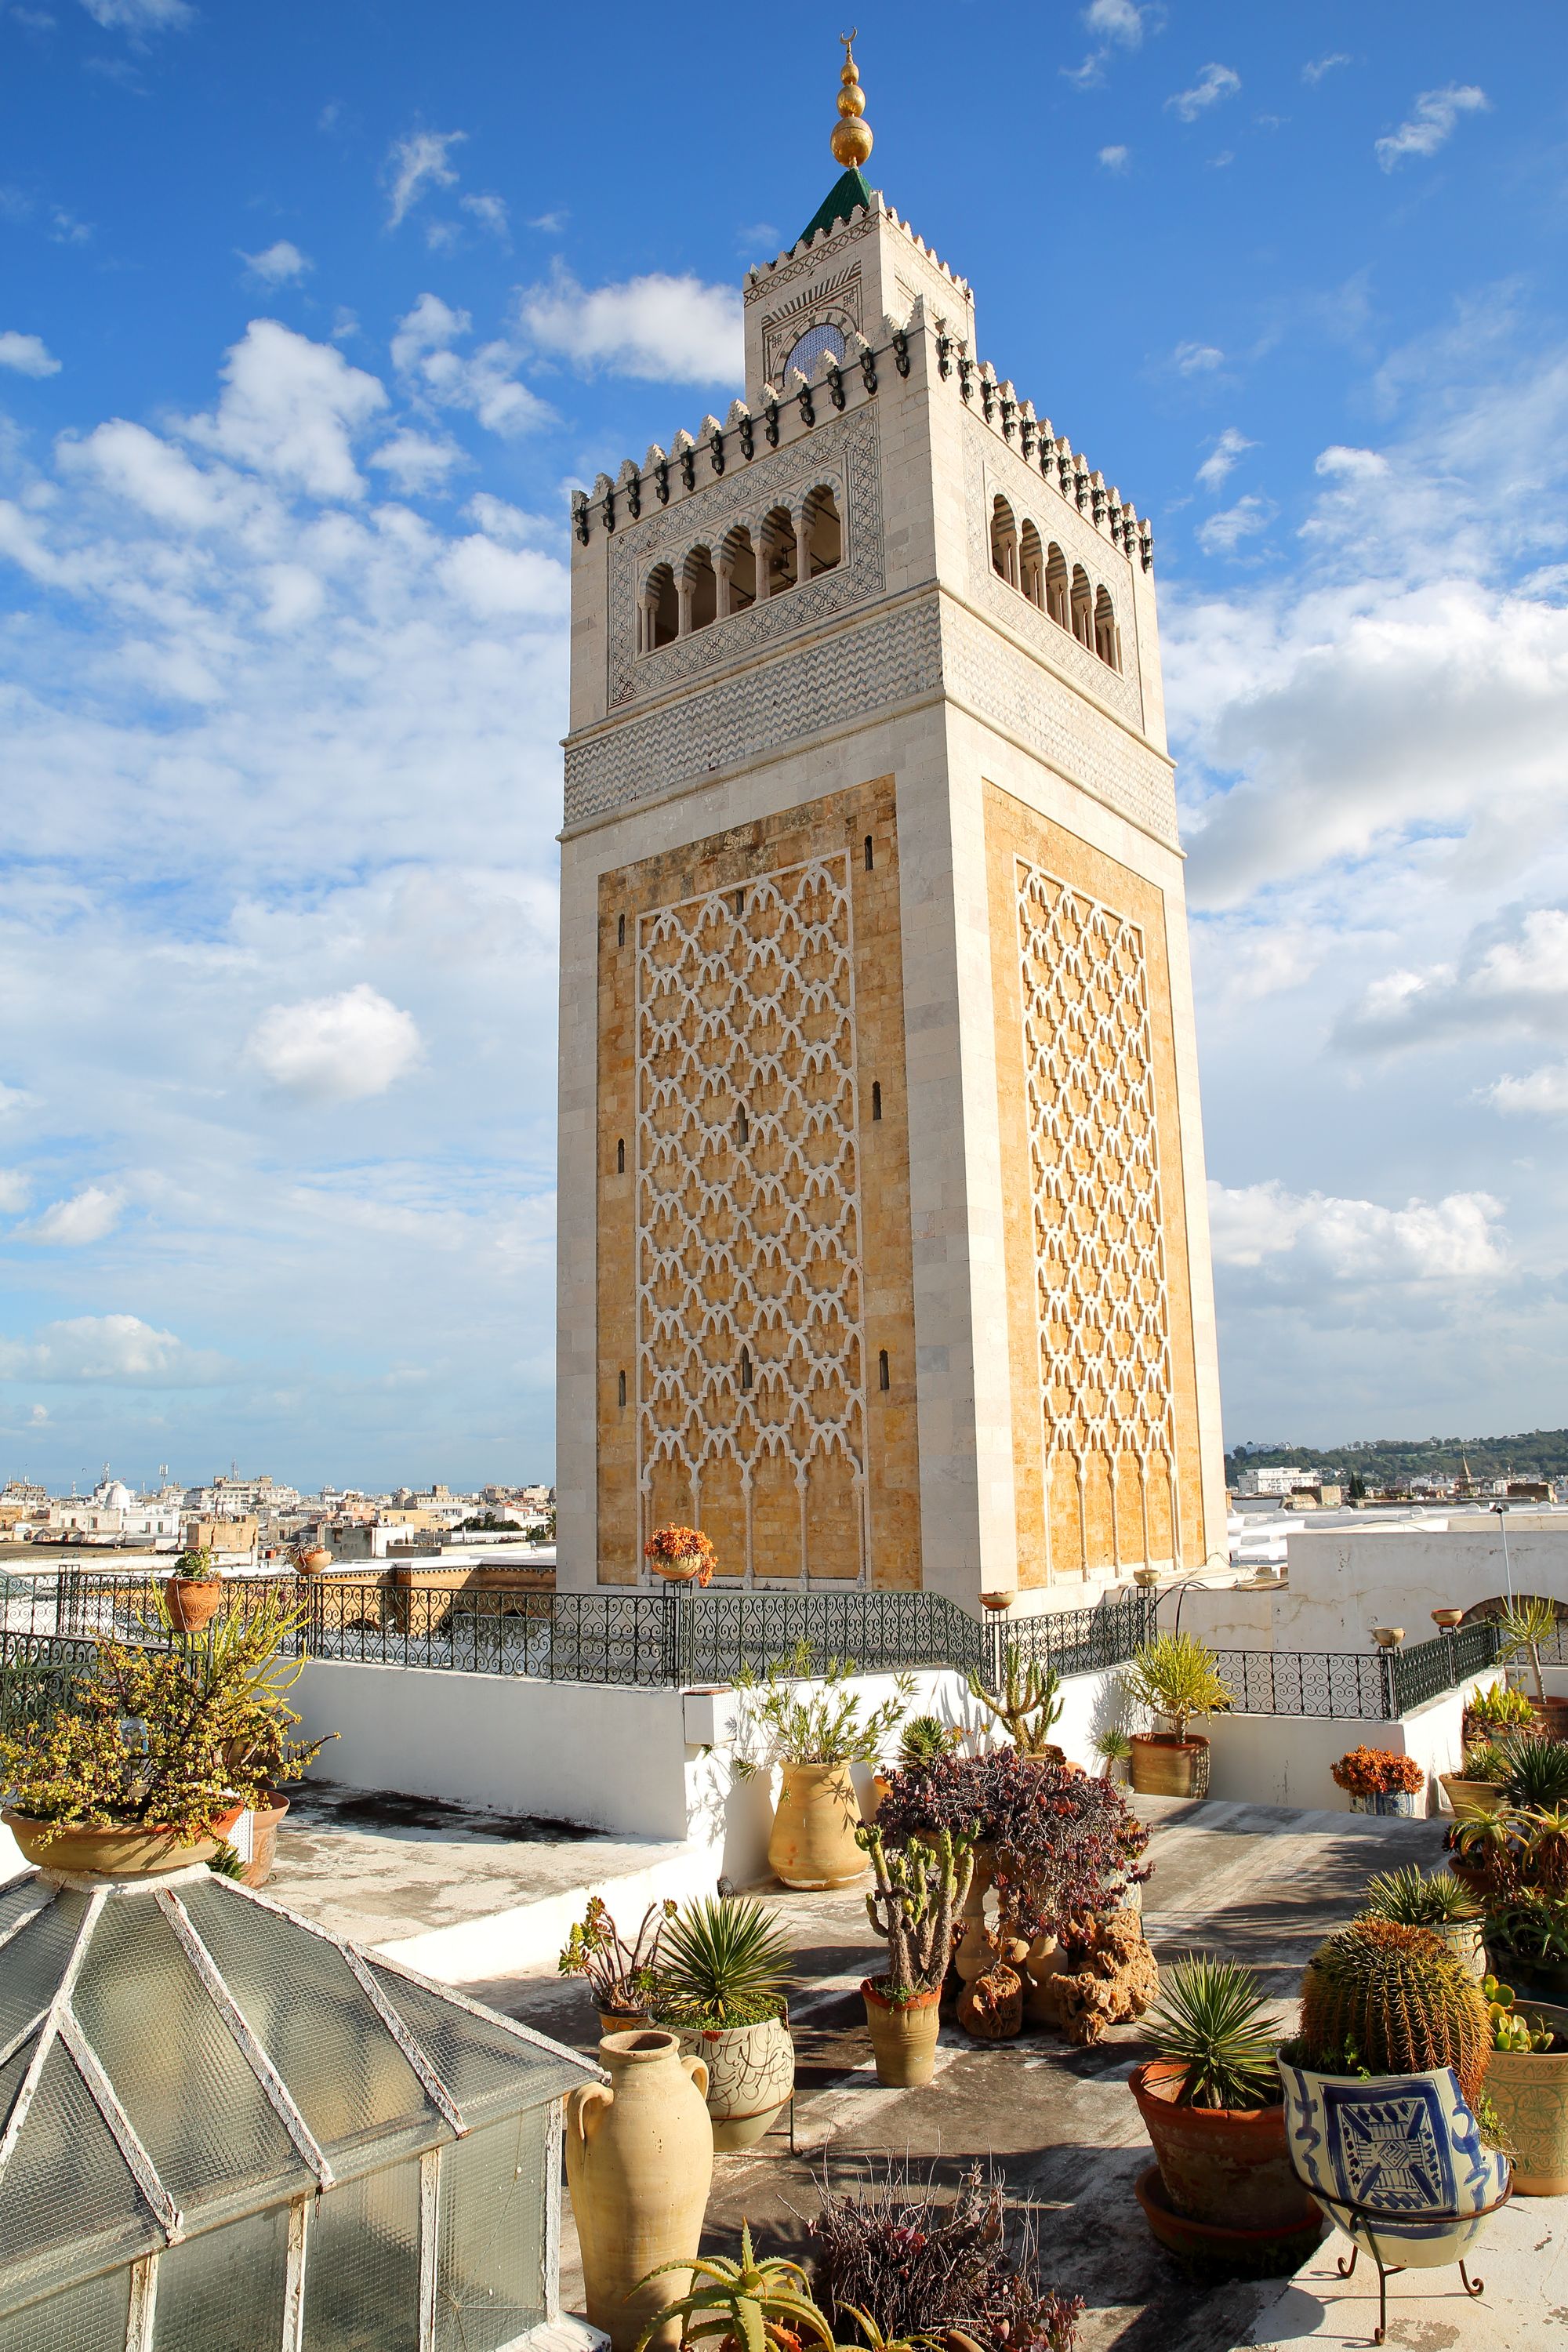 Al-Zaytuna Mosque in Tunis